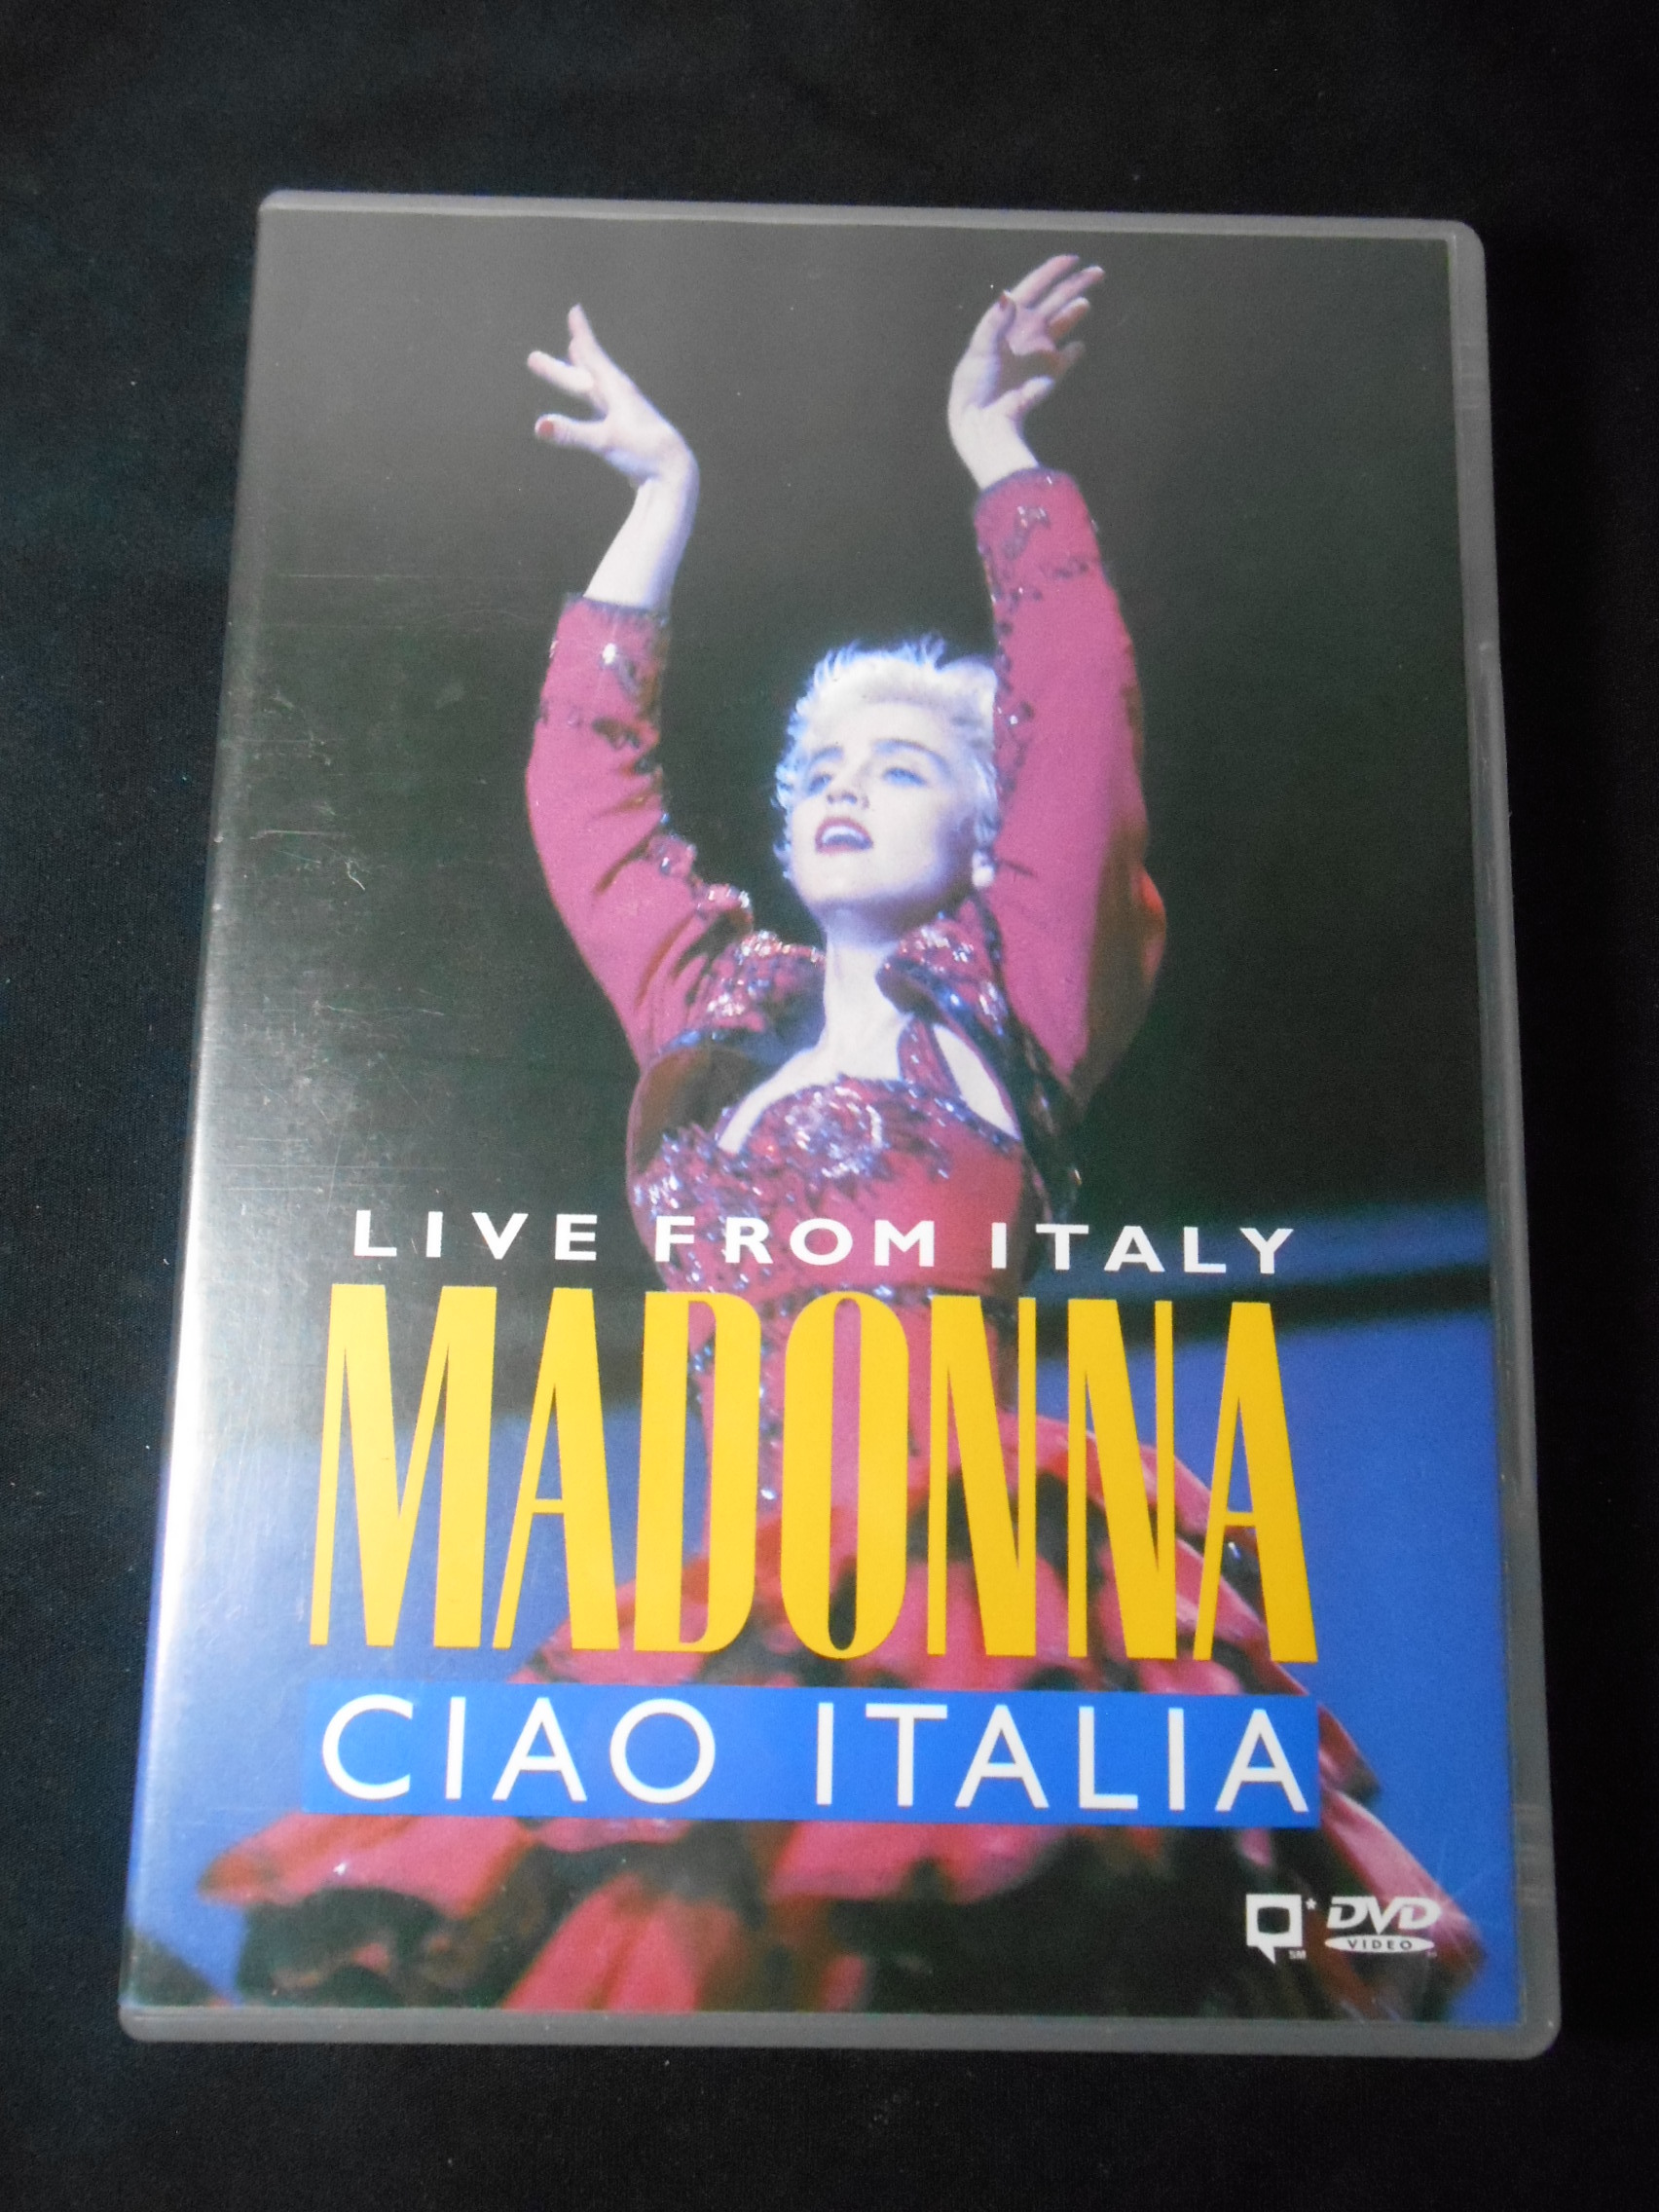 DVD - Madonna - Ciao Italia: Live From Italy